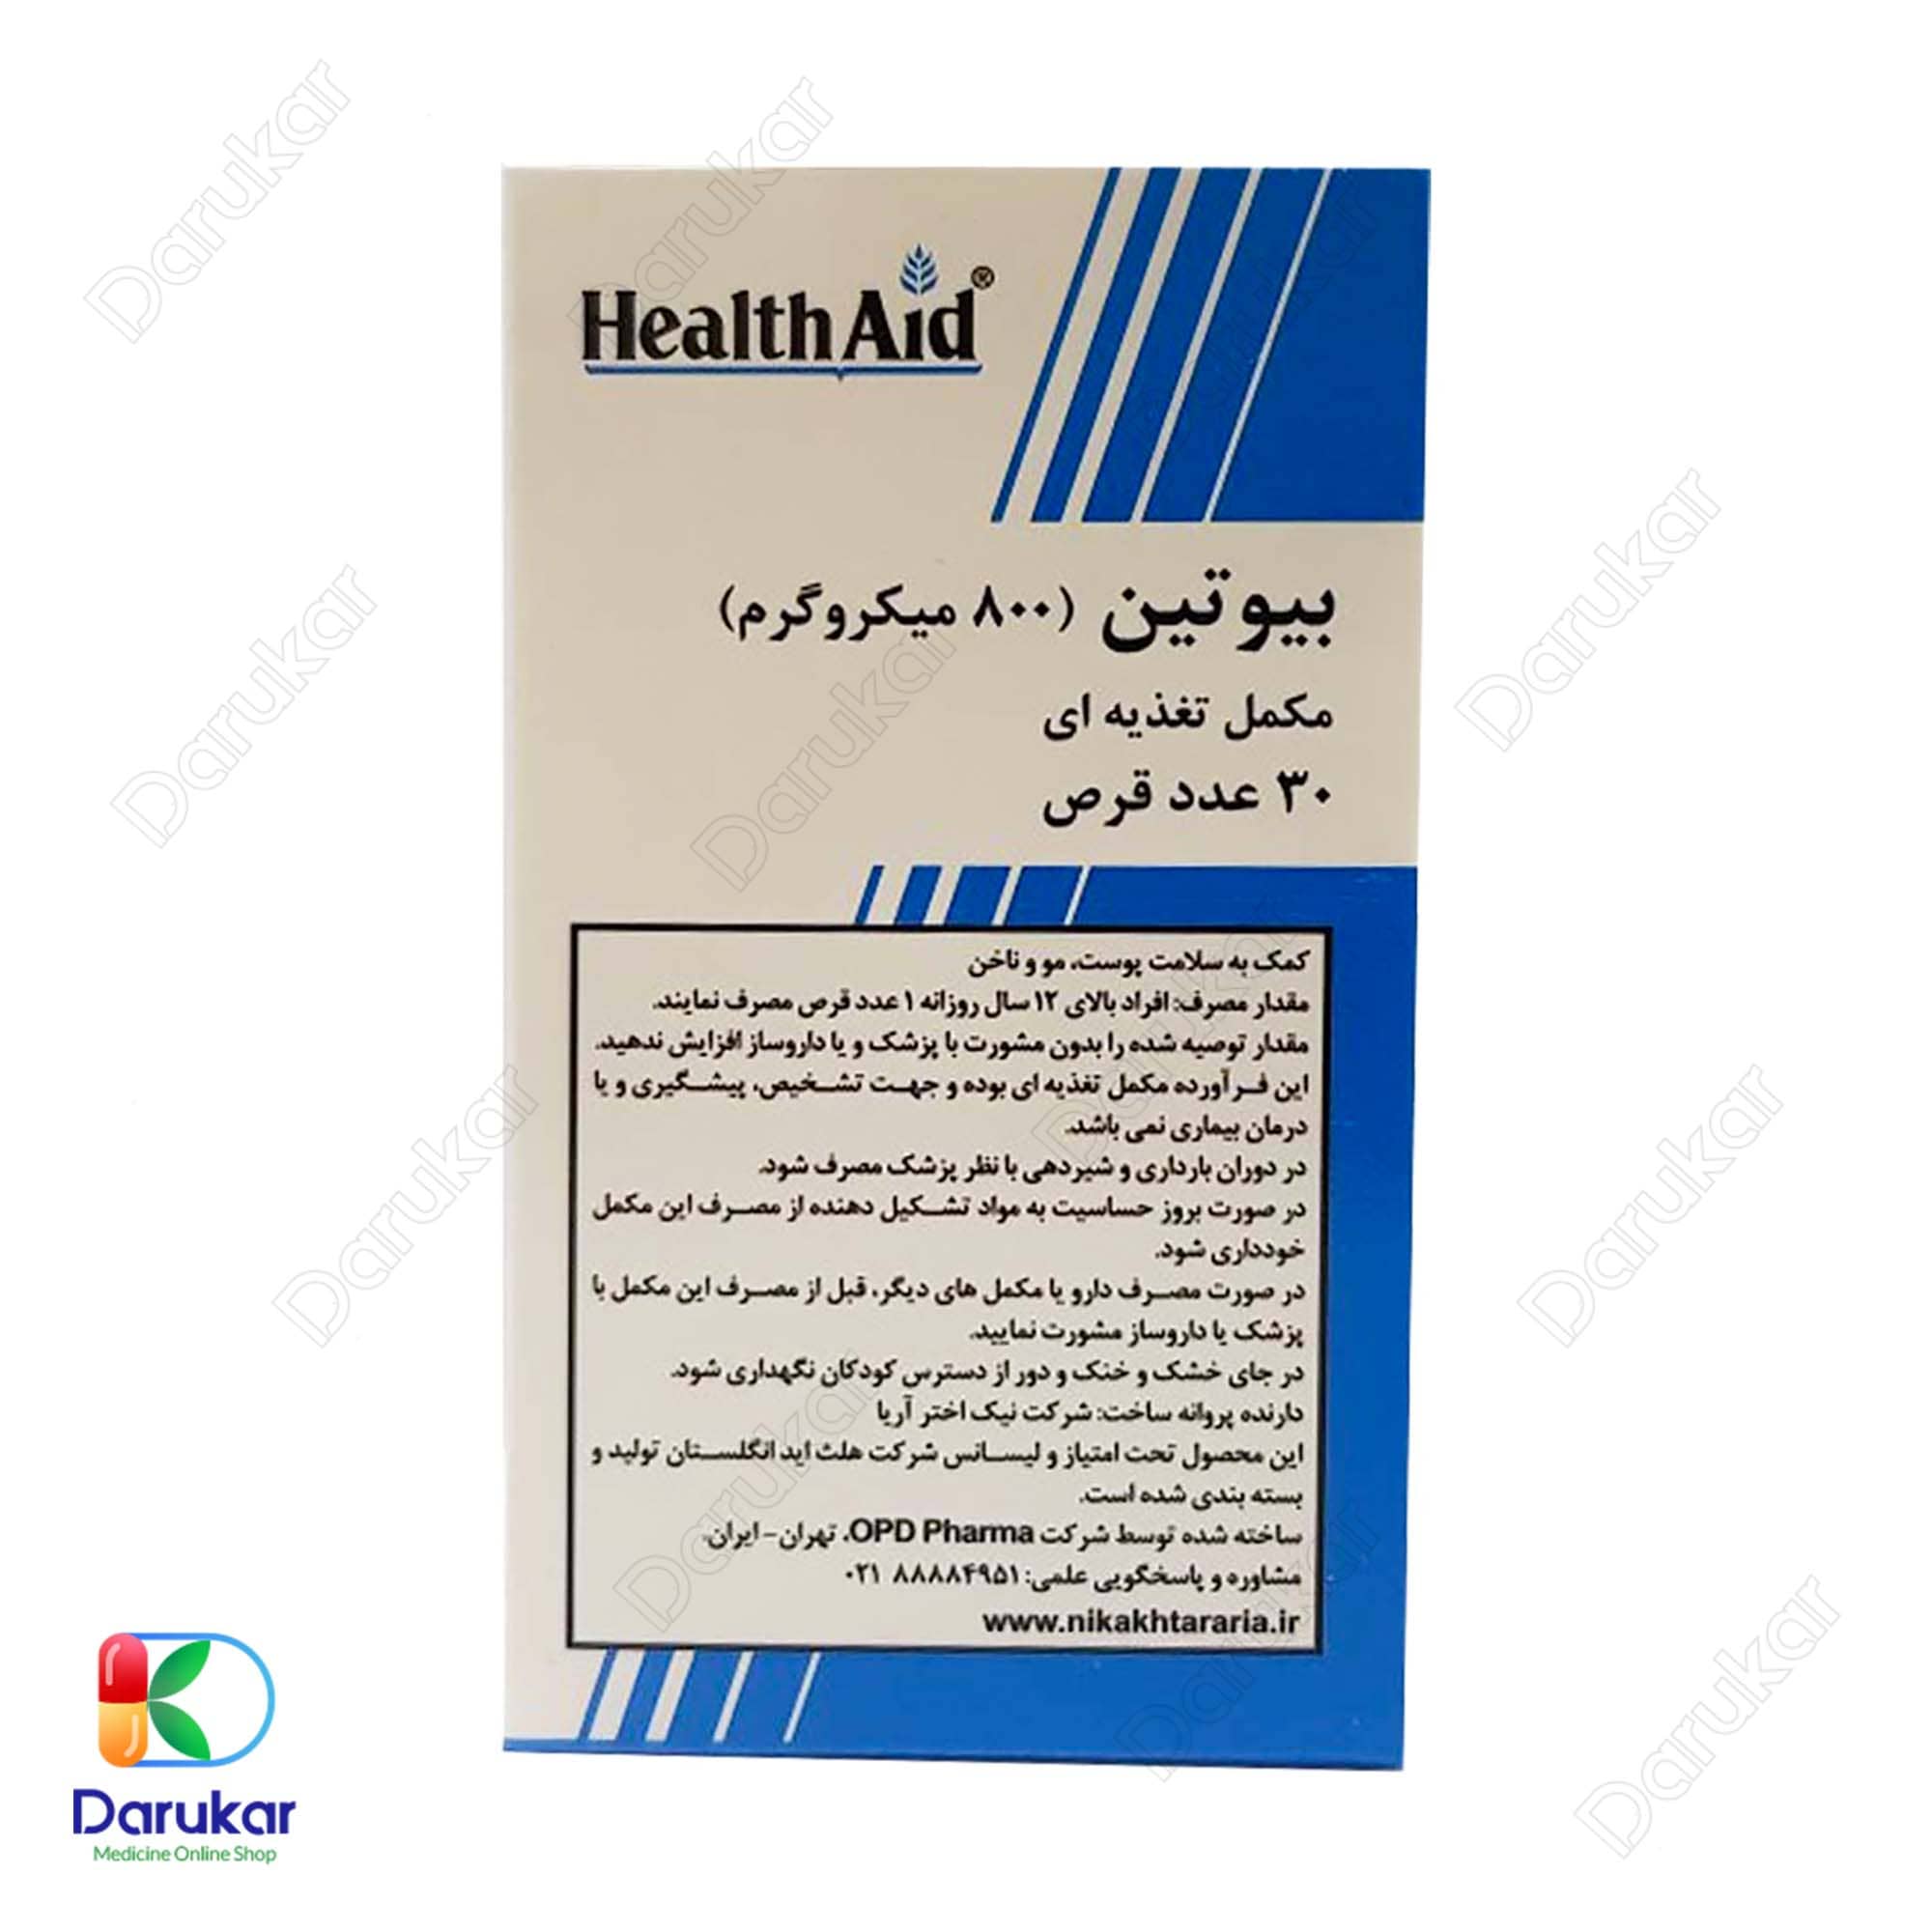 Health Aid Biotin 800 mcg 30 Tabs Image Gallery1